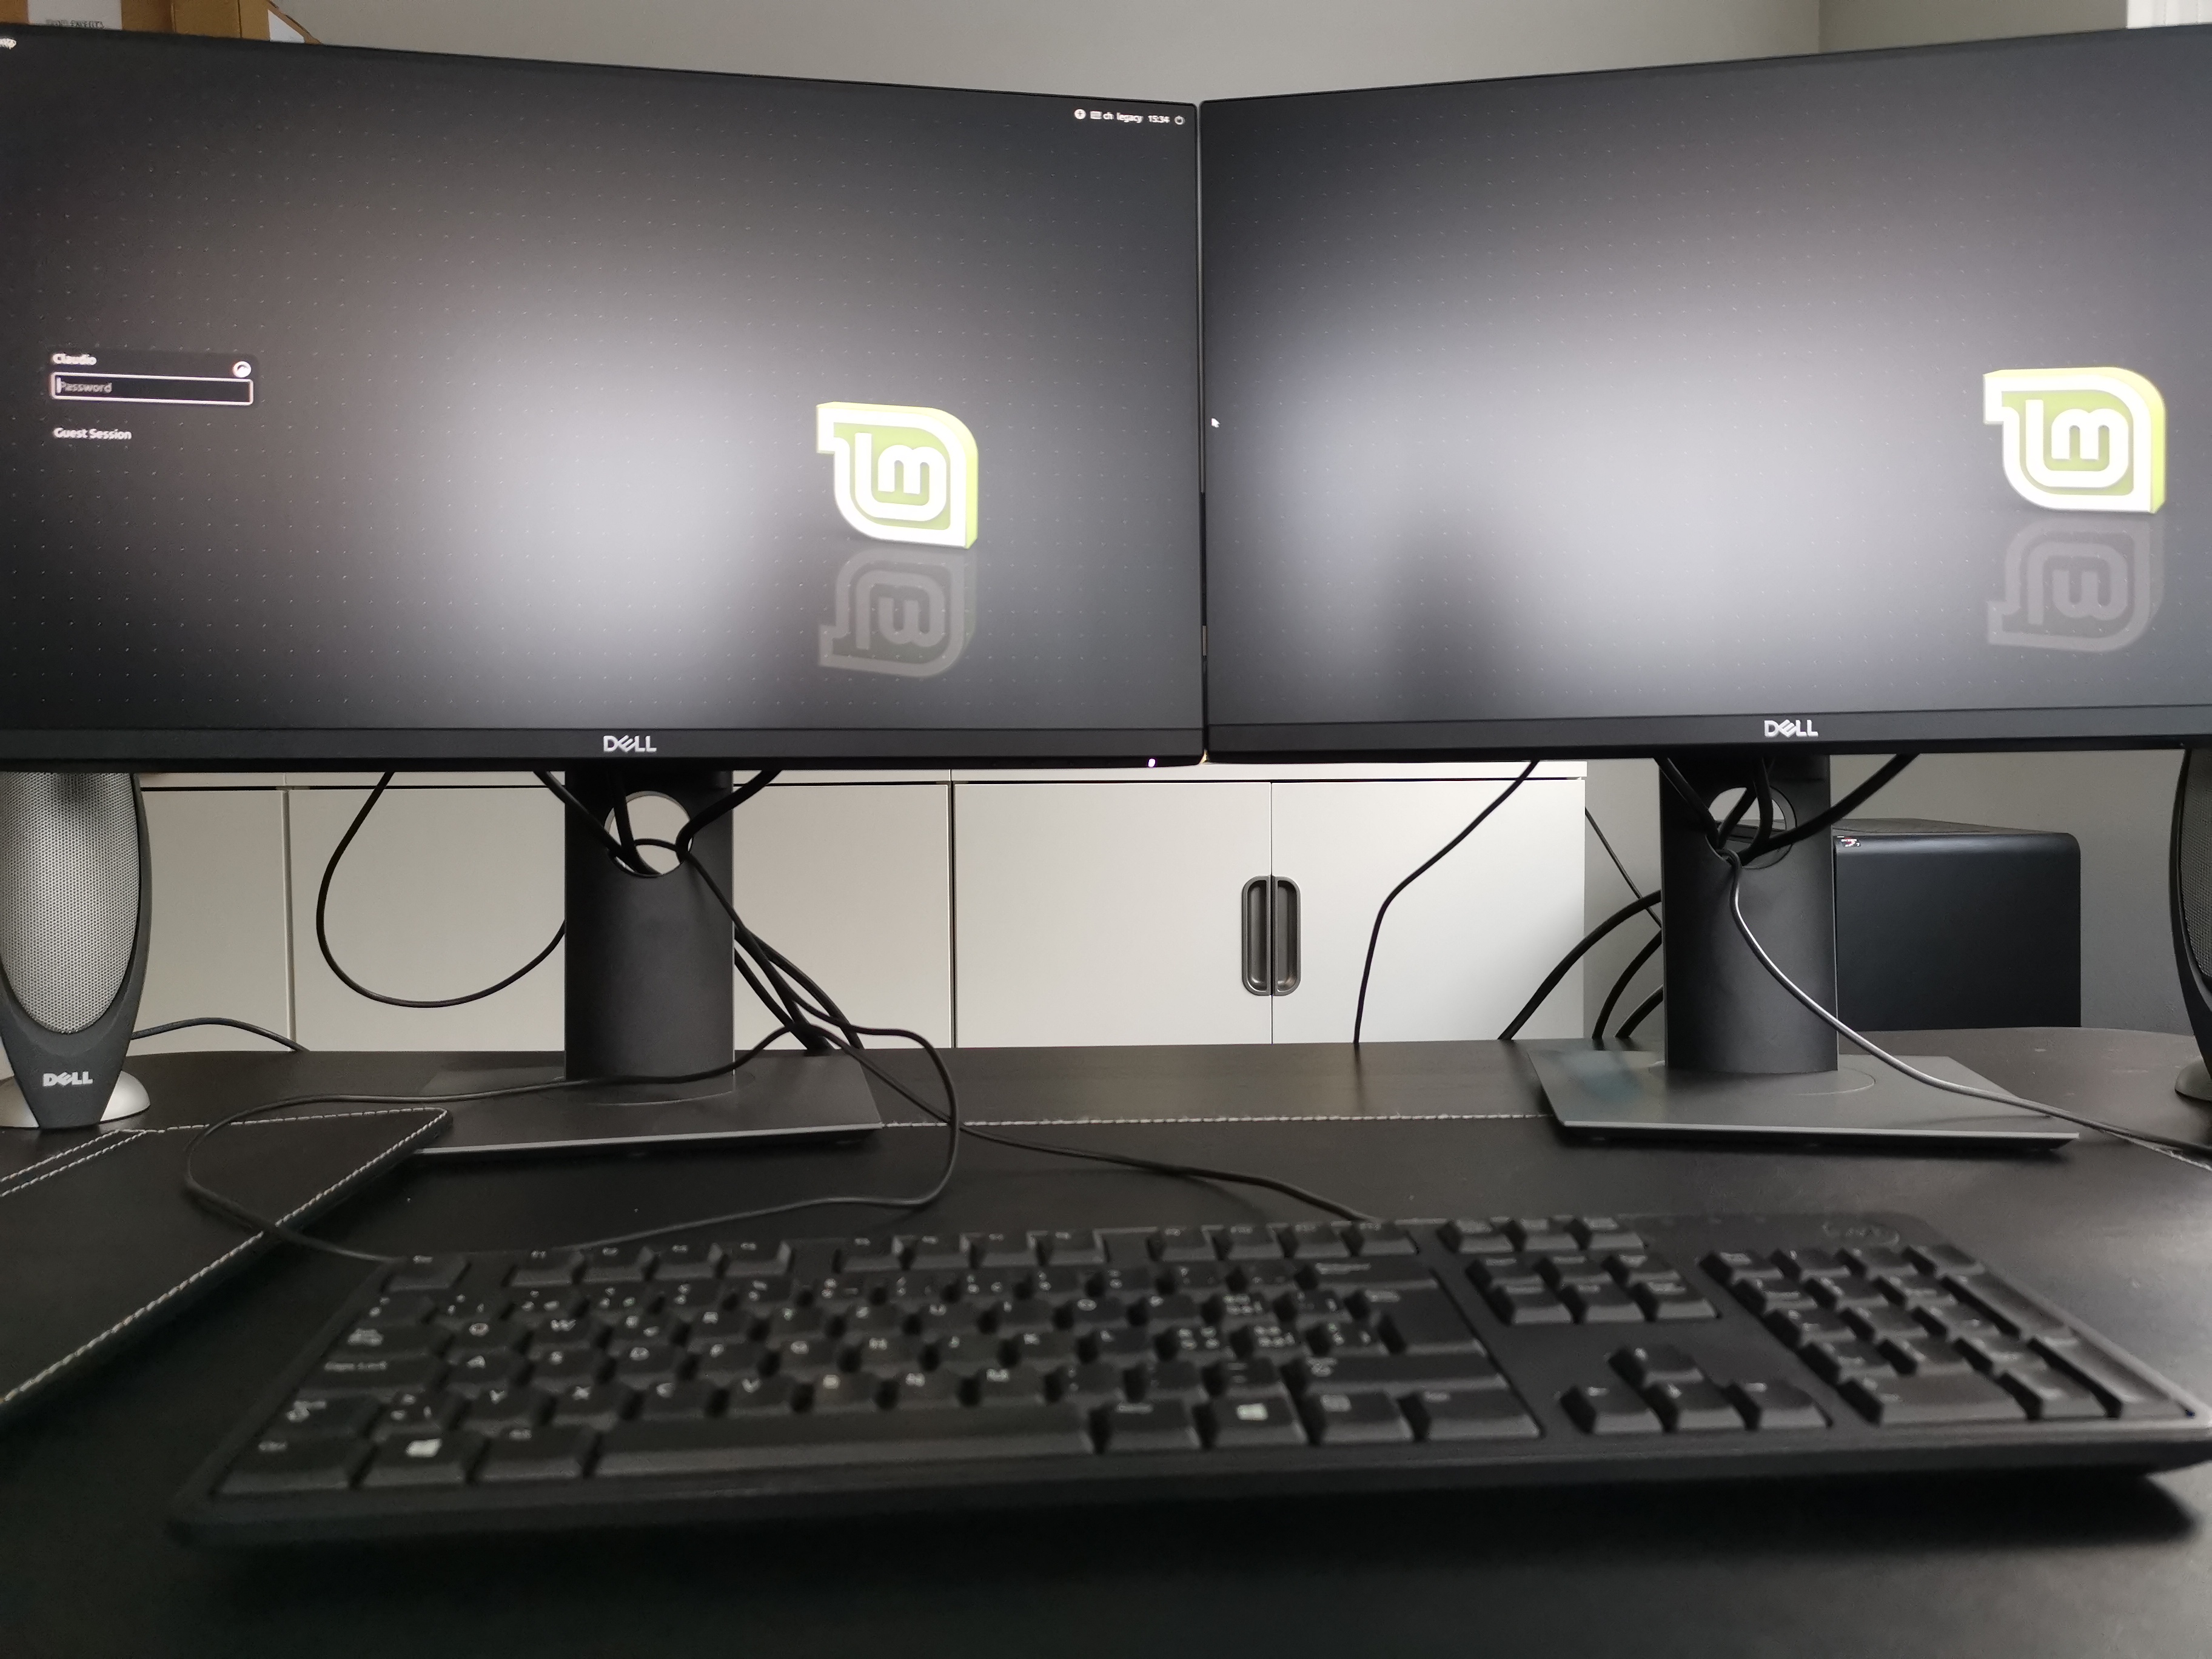 Linux Mint Dual Screen setup using DisplayPort